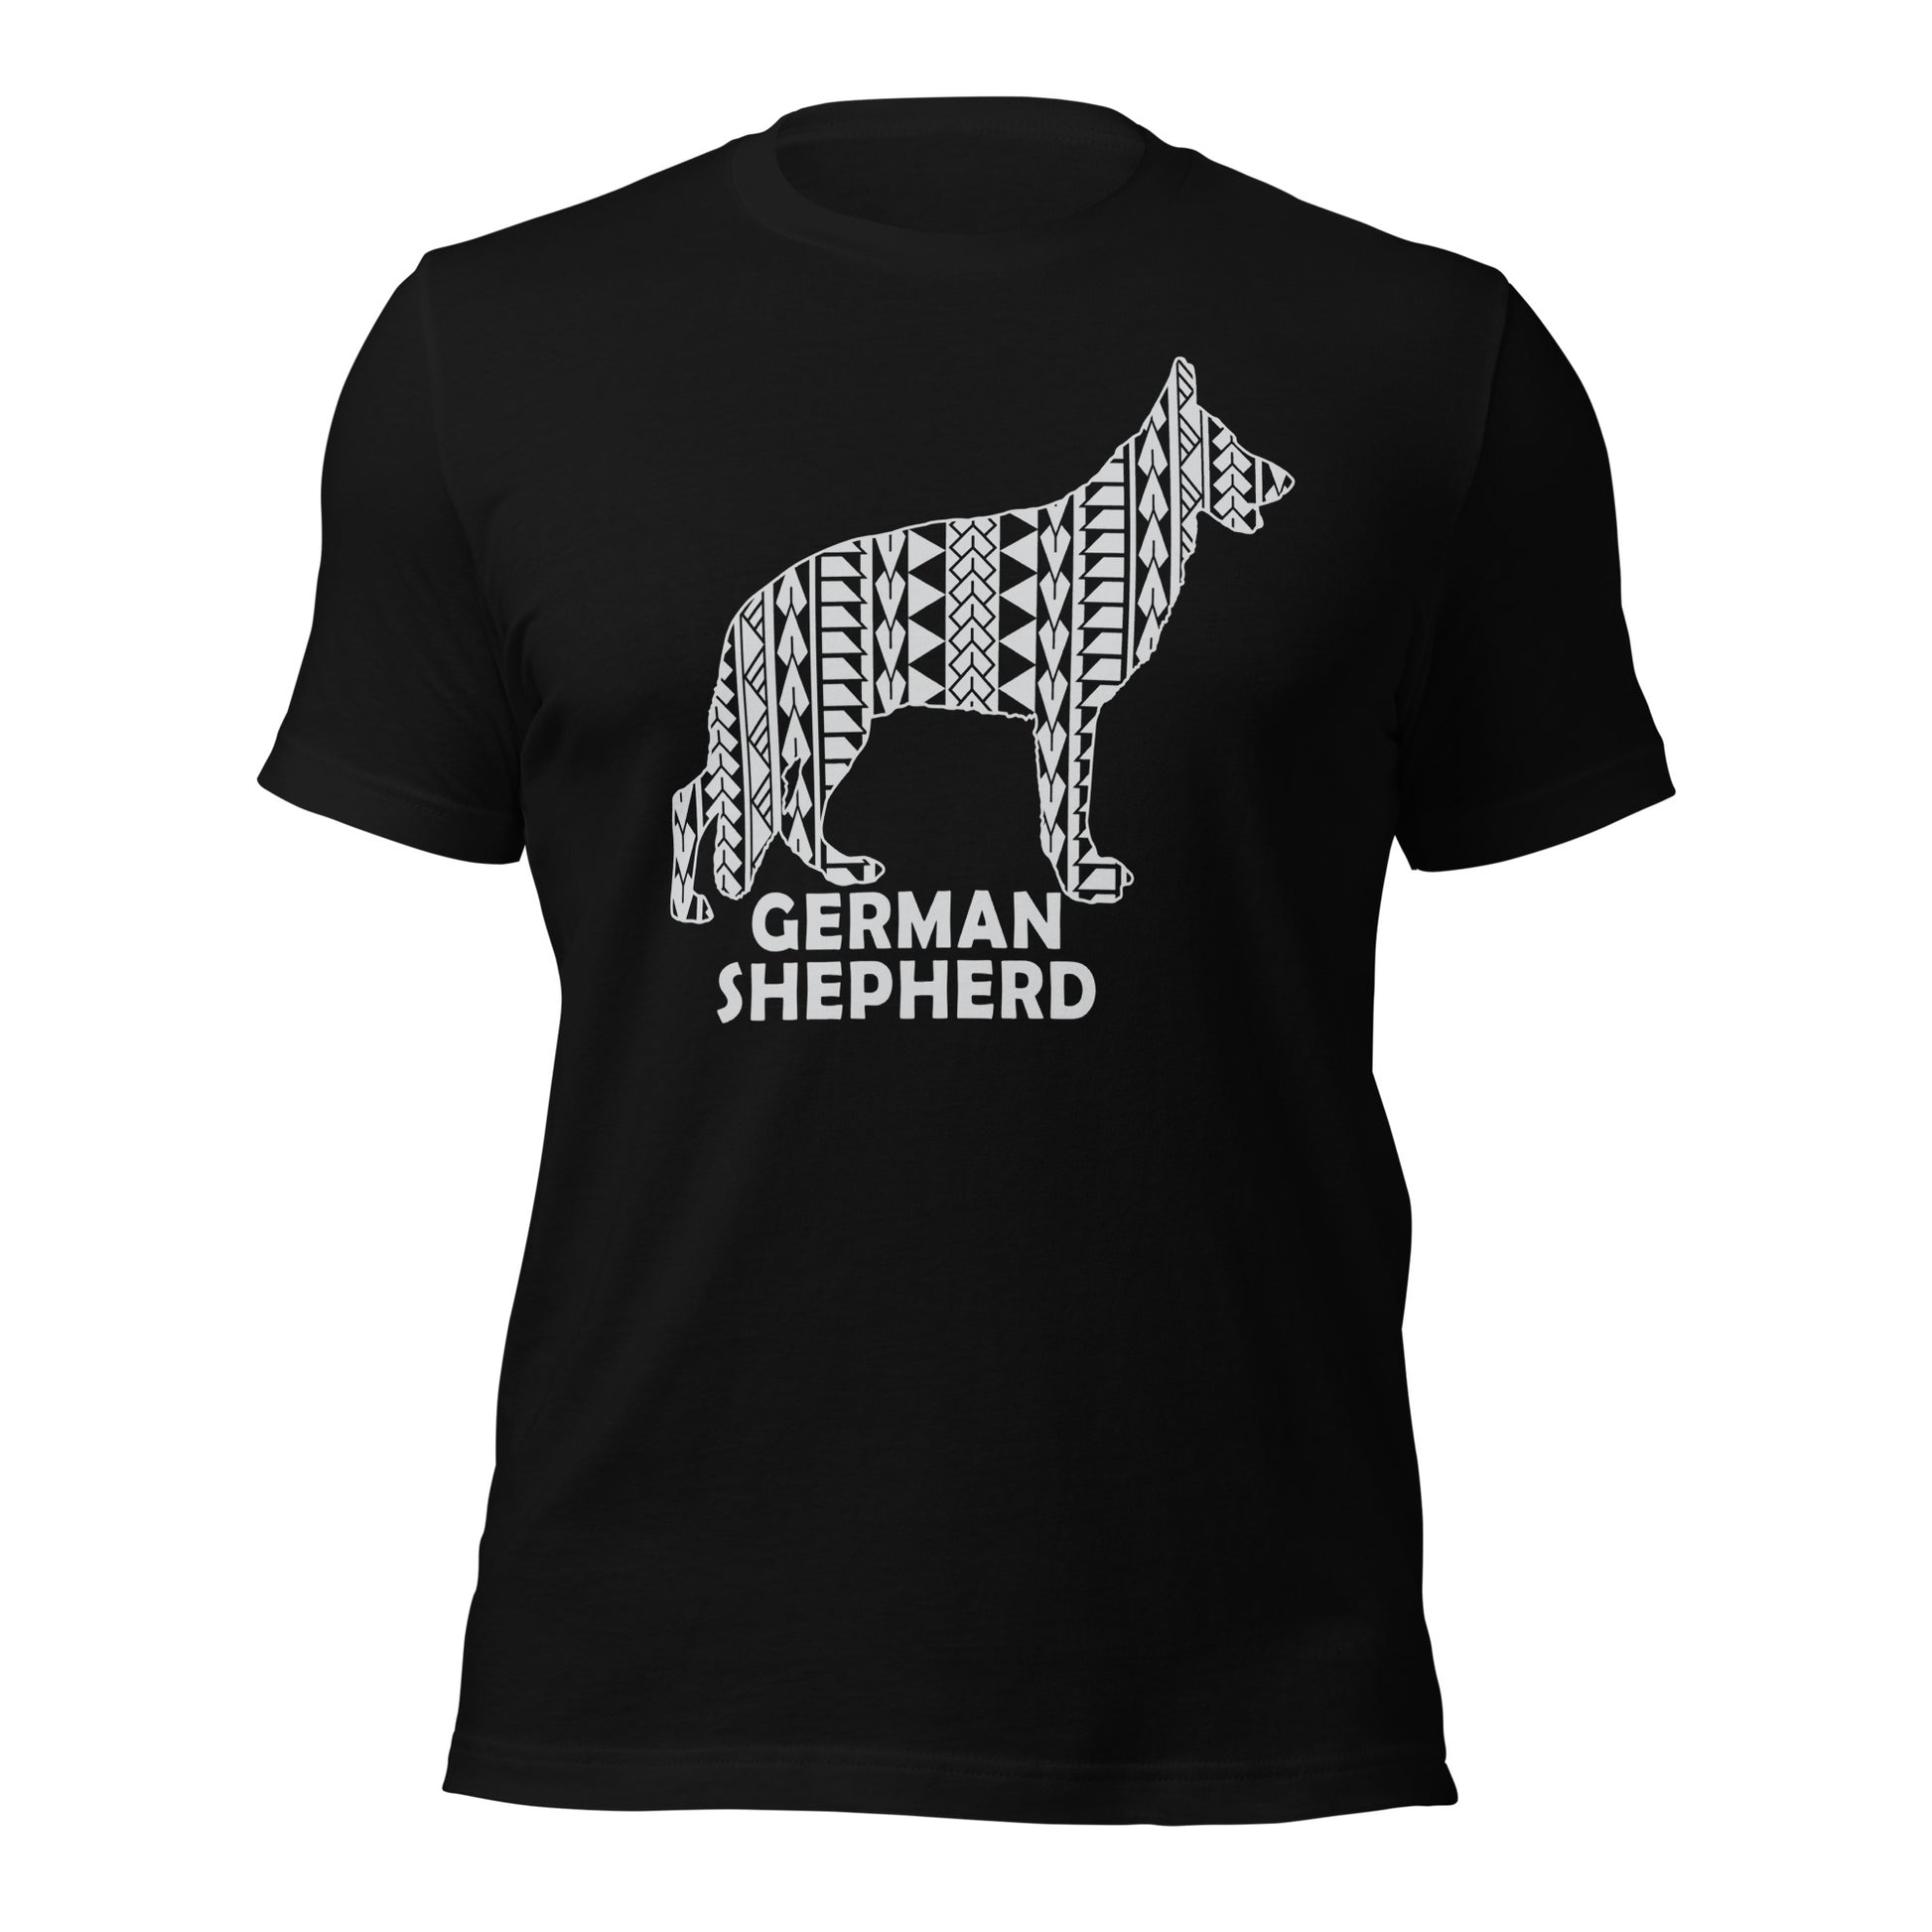 German Shepherd Polynesian t-shirt black by Dog Artistry.